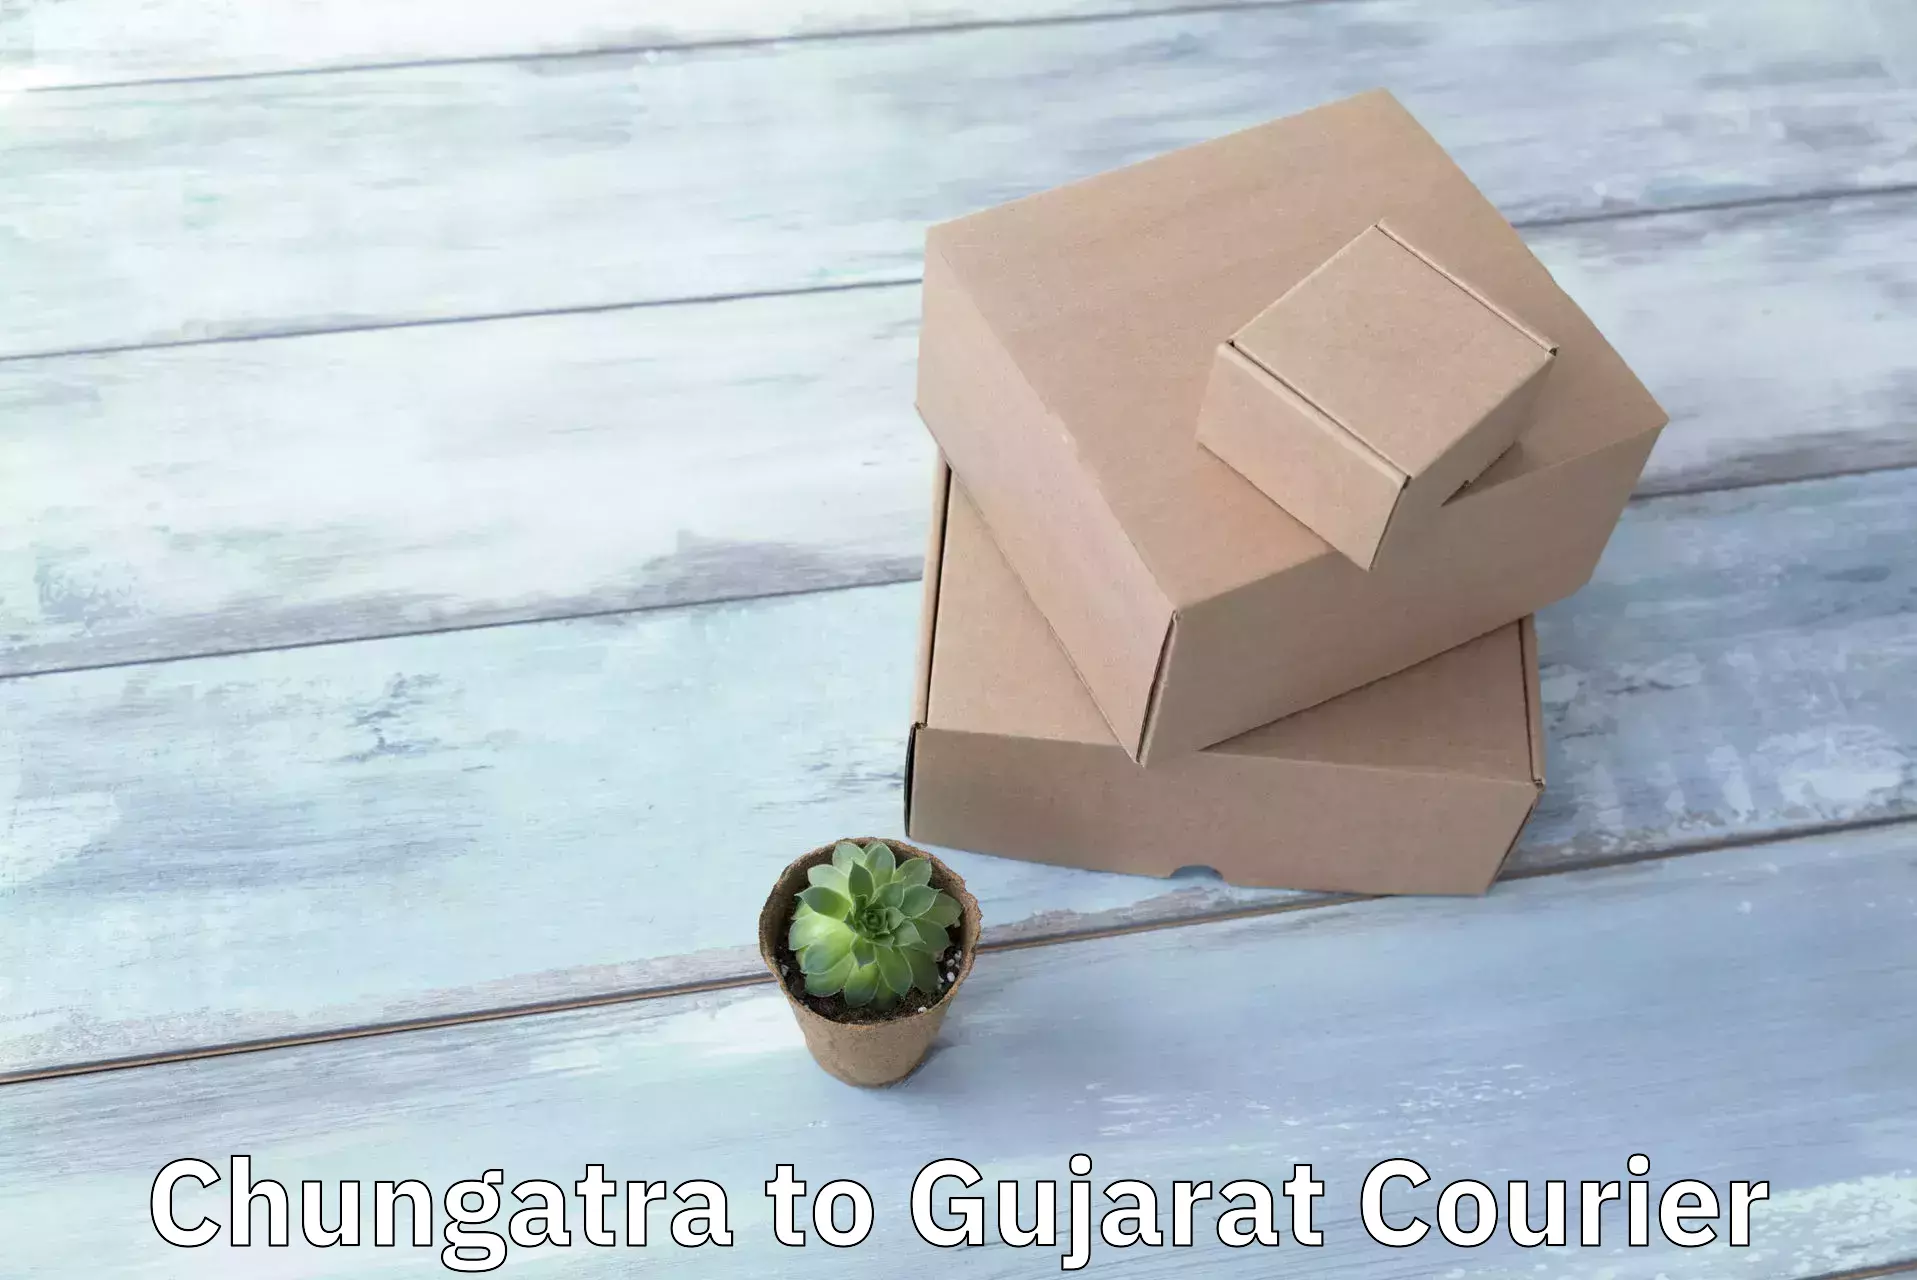 Urban courier service Chungatra to Gujarat